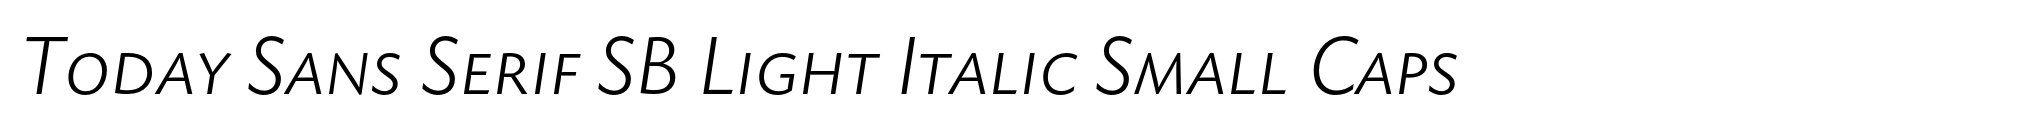 Today Sans Serif SB Light Italic Small Caps image